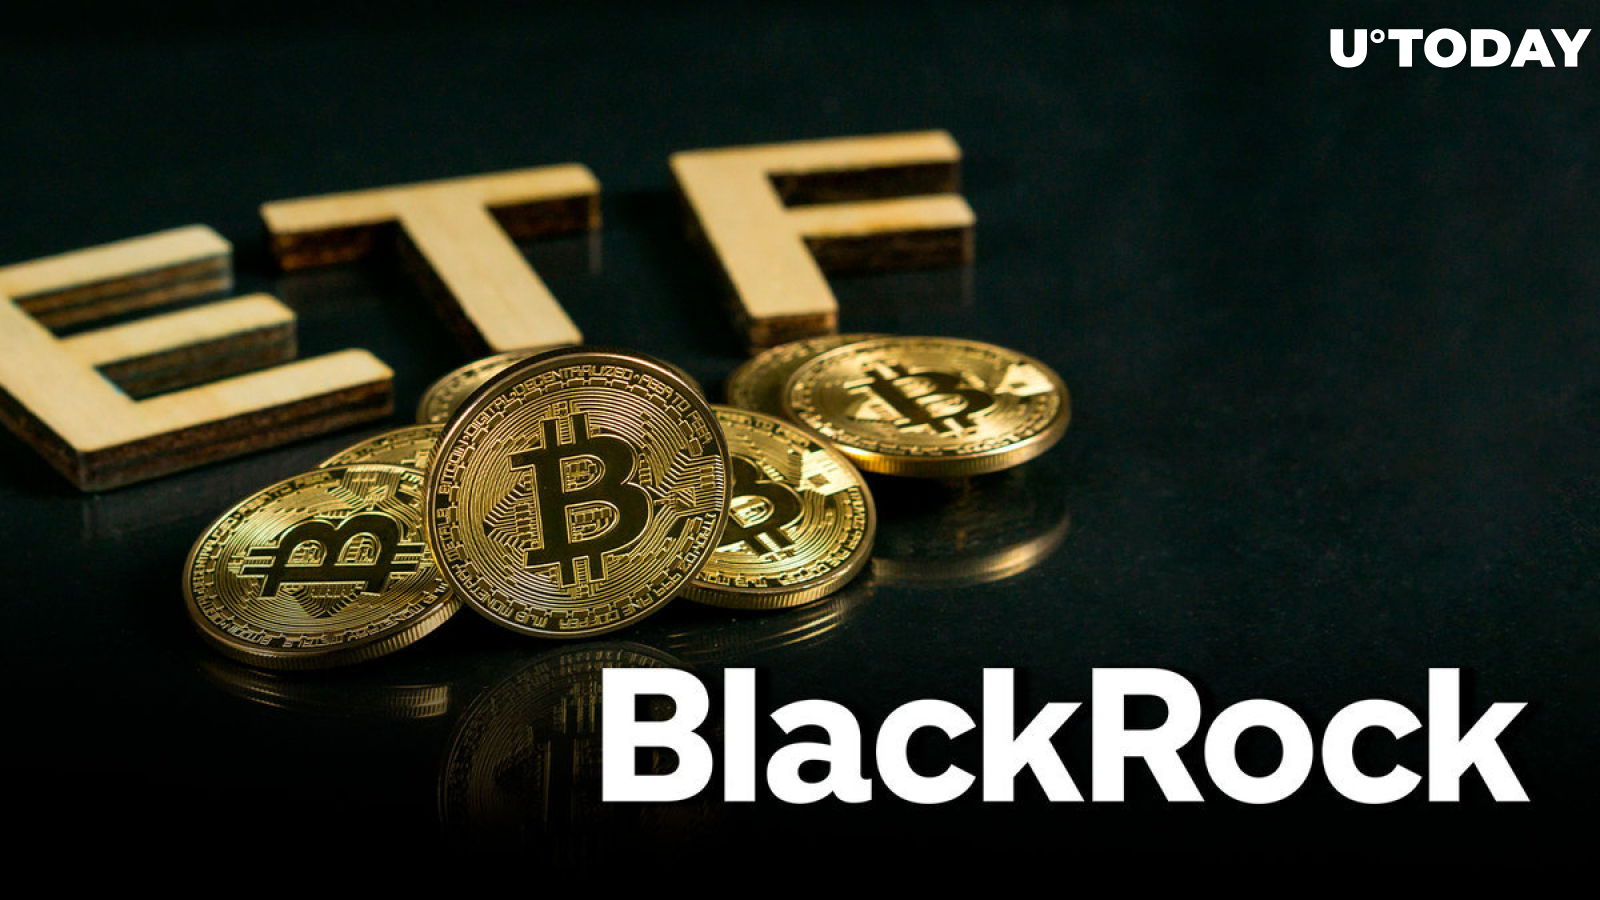 BlackRock Bitcoin ETF Acquires Massive Bitcoin Transfer from Coinbase